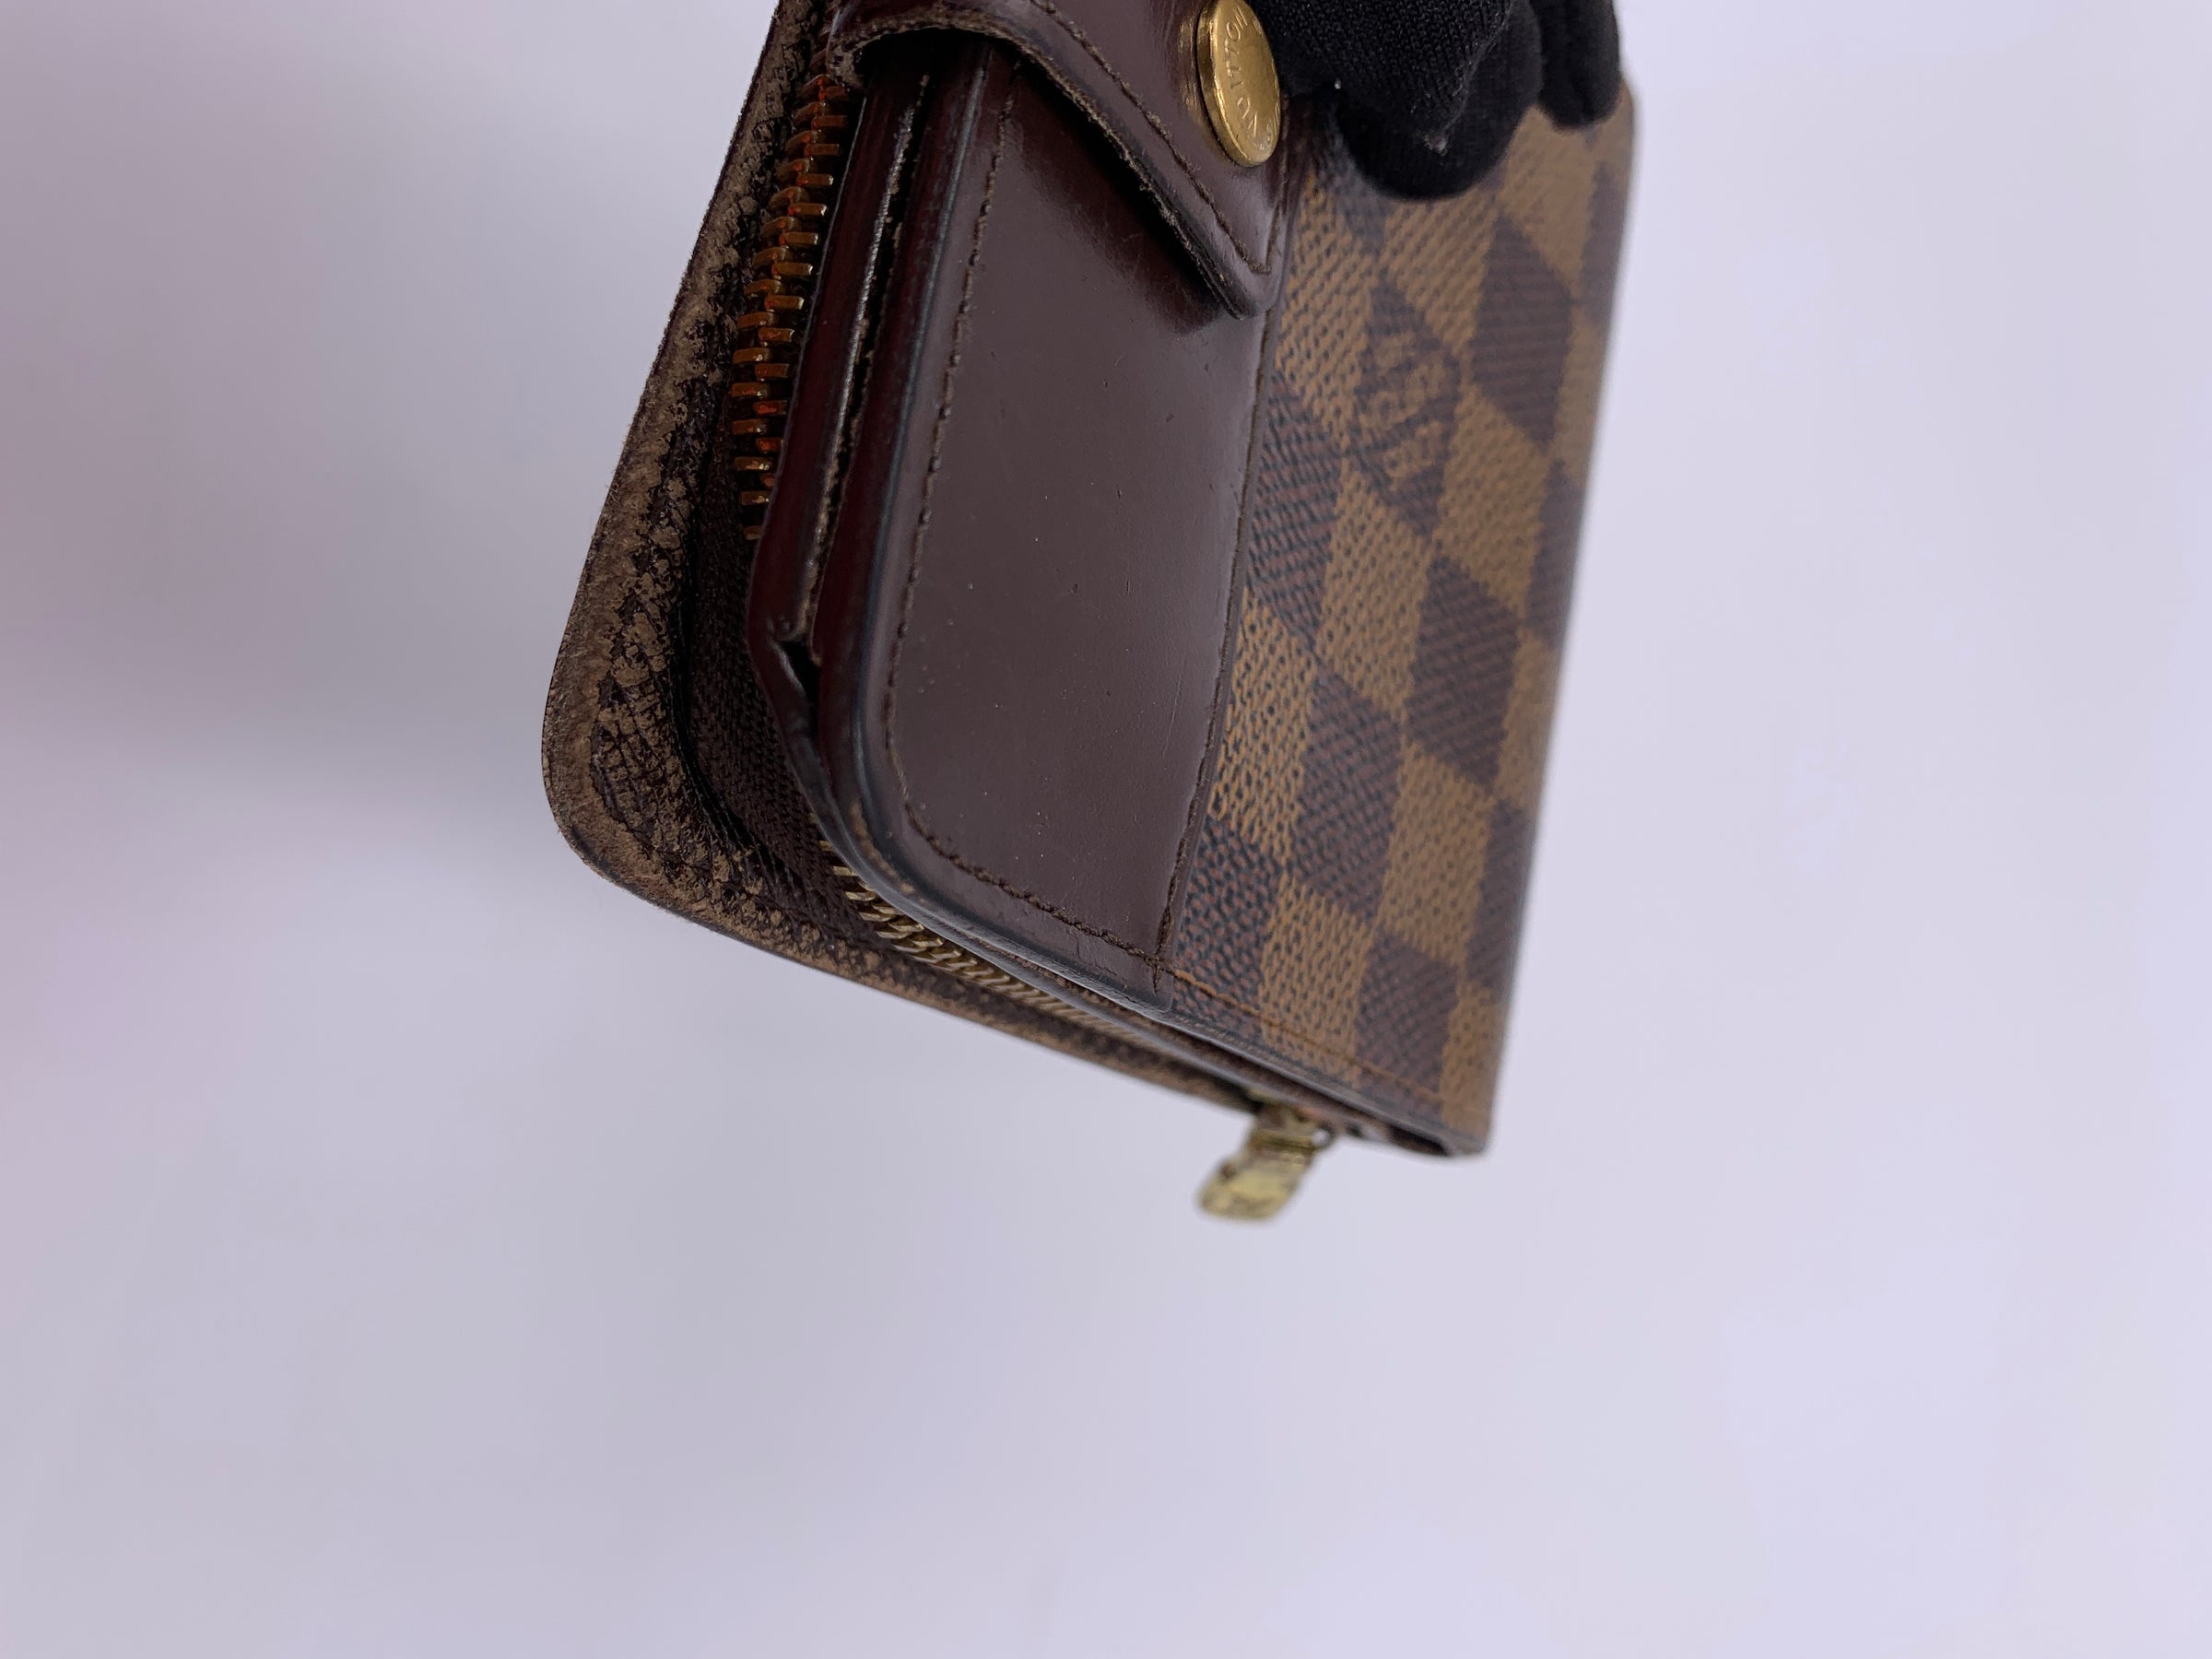 Preloved Louis Vuitton Damier Ebene Compact Zip Bifold Wallet